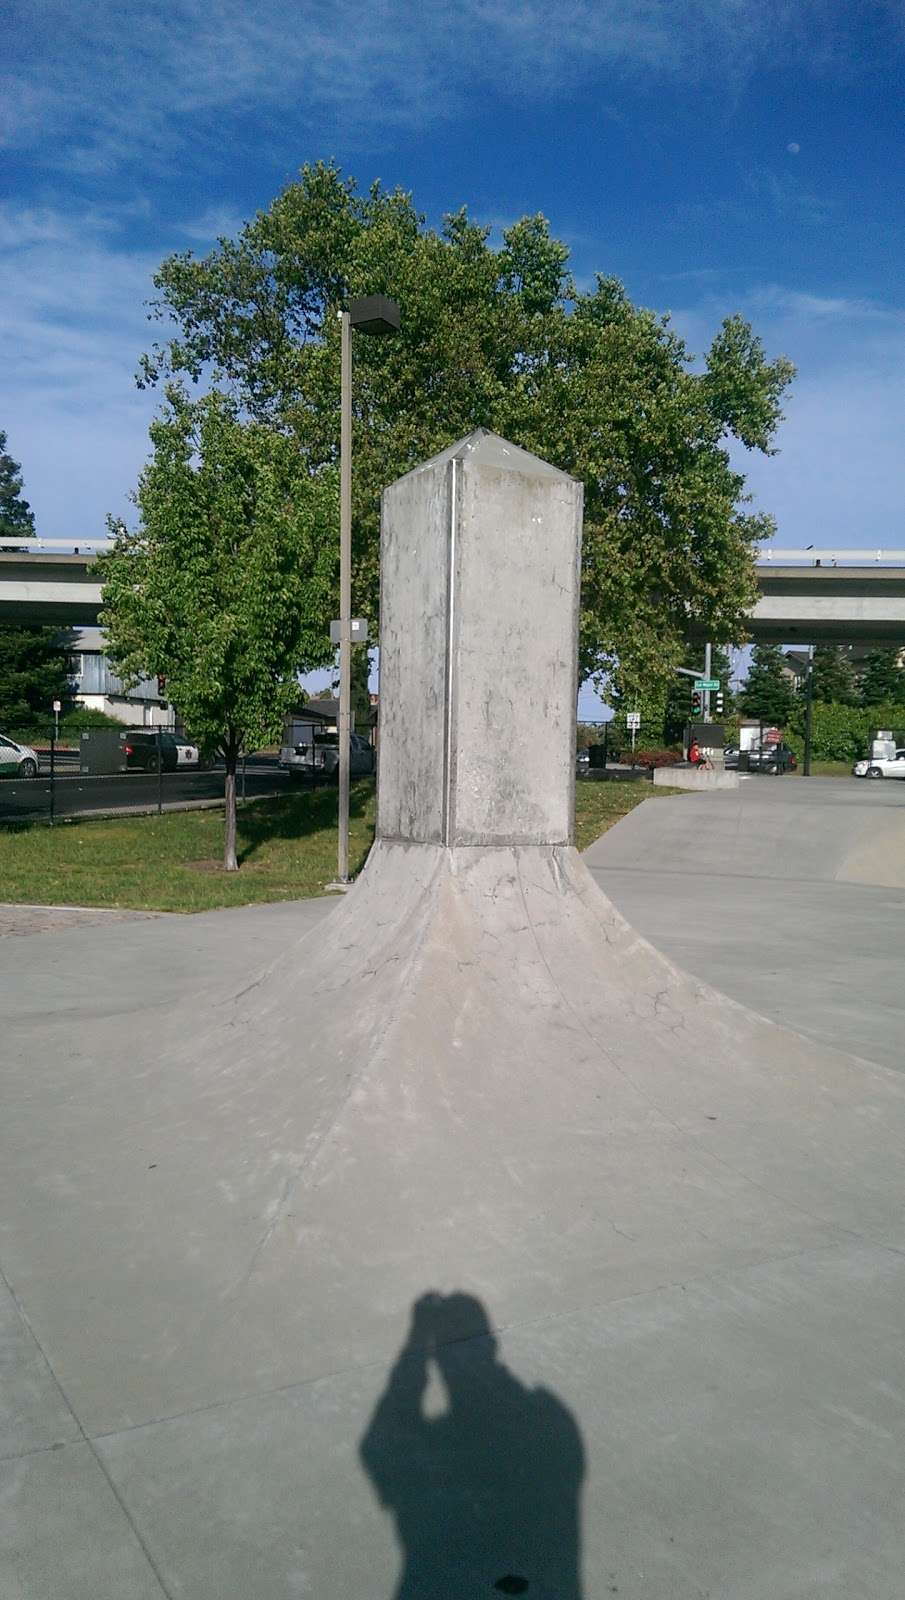 Concord Skatepark | 1174 San Miguel Rd, Concord, CA 94518, USA